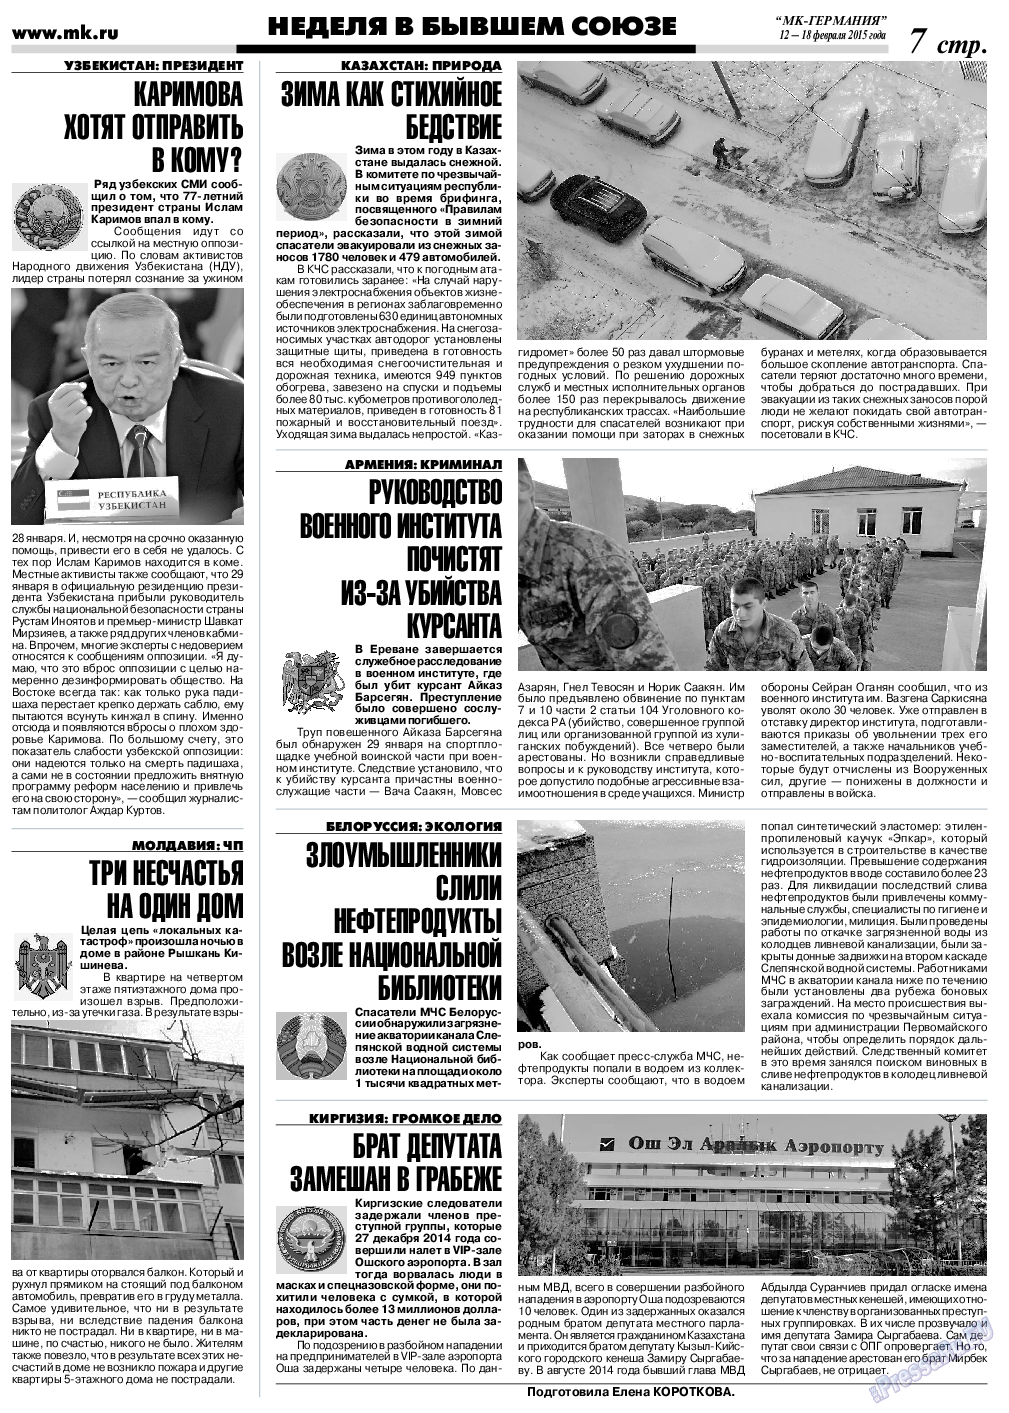 МК-Германия, газета. 2015 №7 стр.7